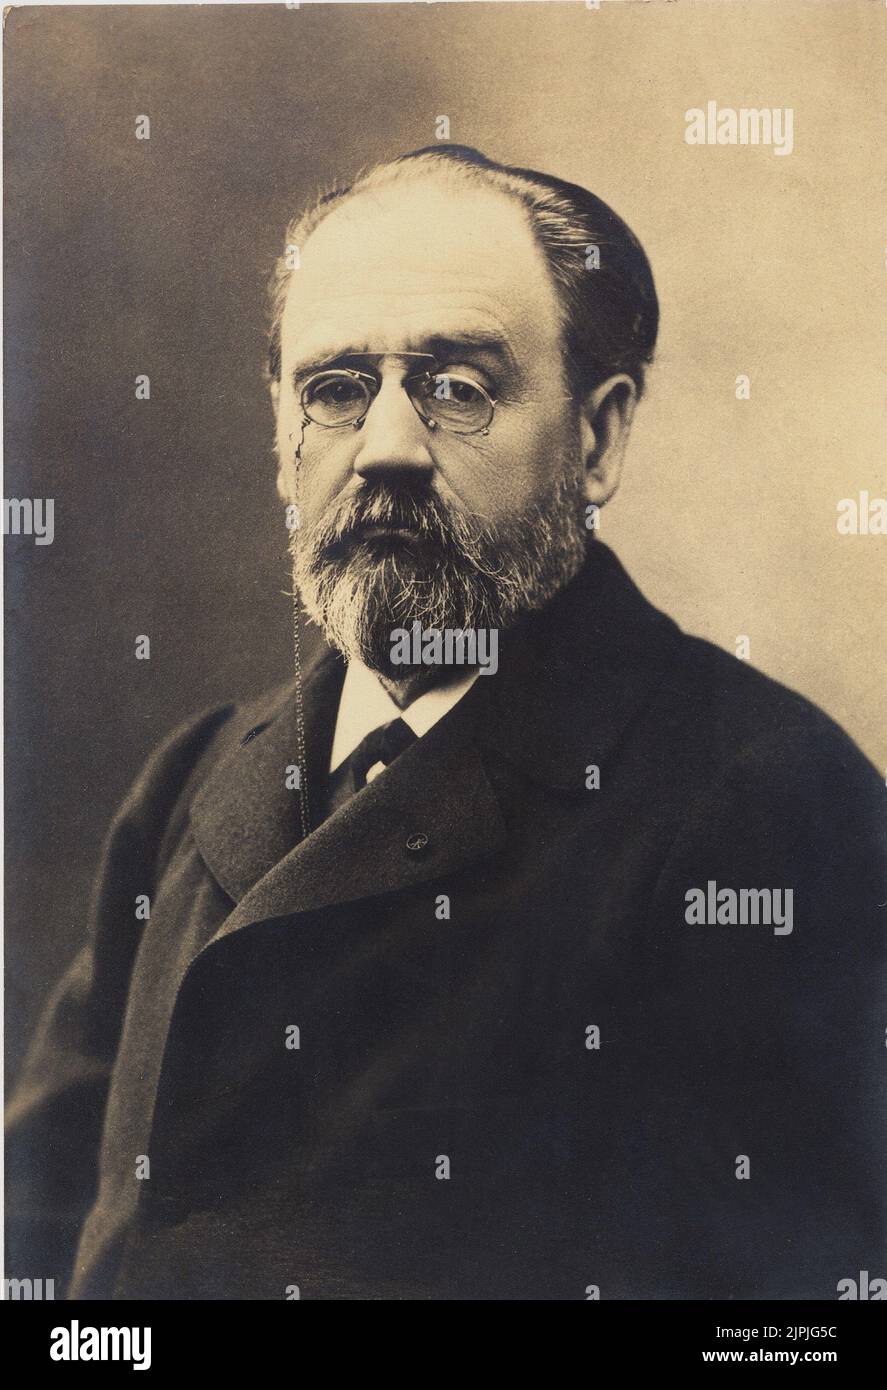 The celebrated french writer Emile ZOLA (  1840 - 1902 ) - NATURALISMO - NATURALISM - SCRITTORE - LETTERATURA - LITERATURE - OCCHIALI - pincenez - pince-nez - glasses - barba e baffi - beard ---- Archivio GBB Stock Photo